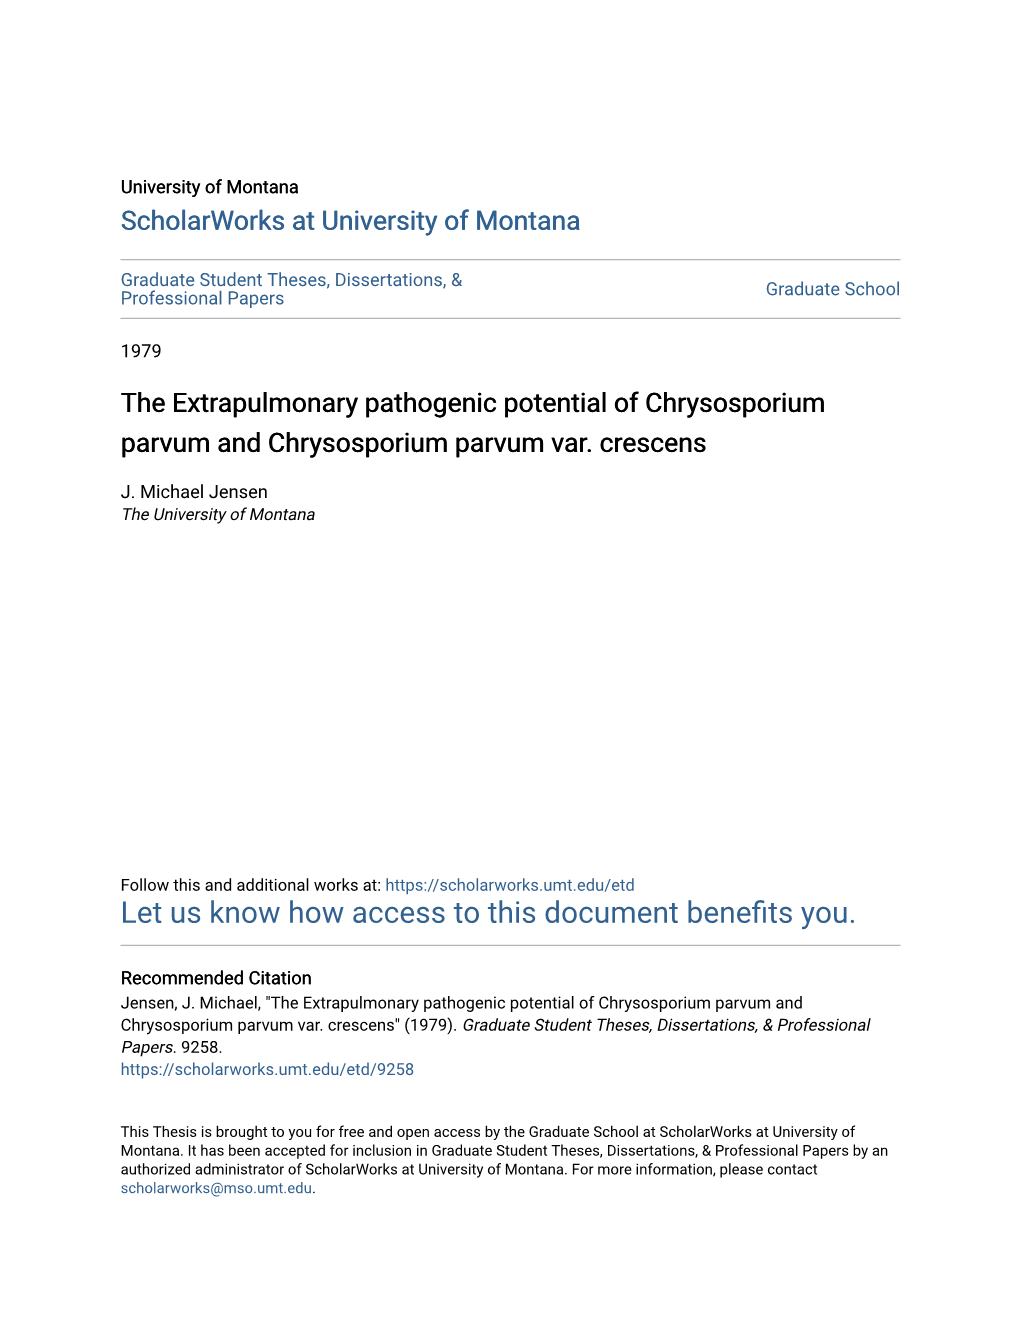 The Extrapulmonary Pathogenic Potential of Chrysosporium Parvum and Chrysosporium Parvum Var